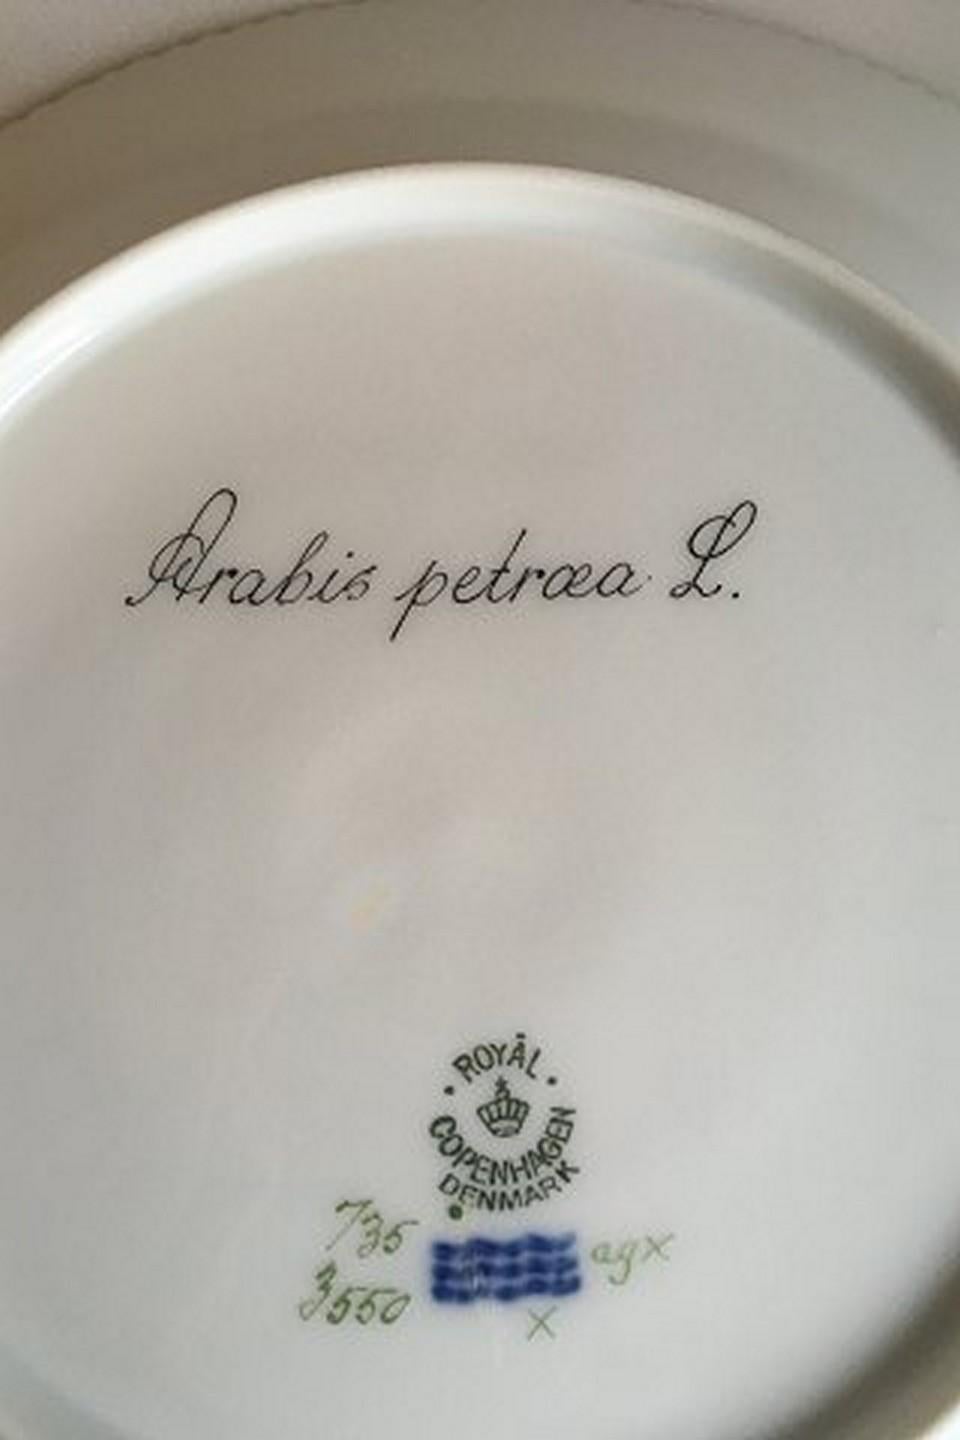 Royal Copenhagen Flora Danica lunch plate #735/3550.
Latin name: Arabis petraea L.
Measures 22 cm / 8 21/32